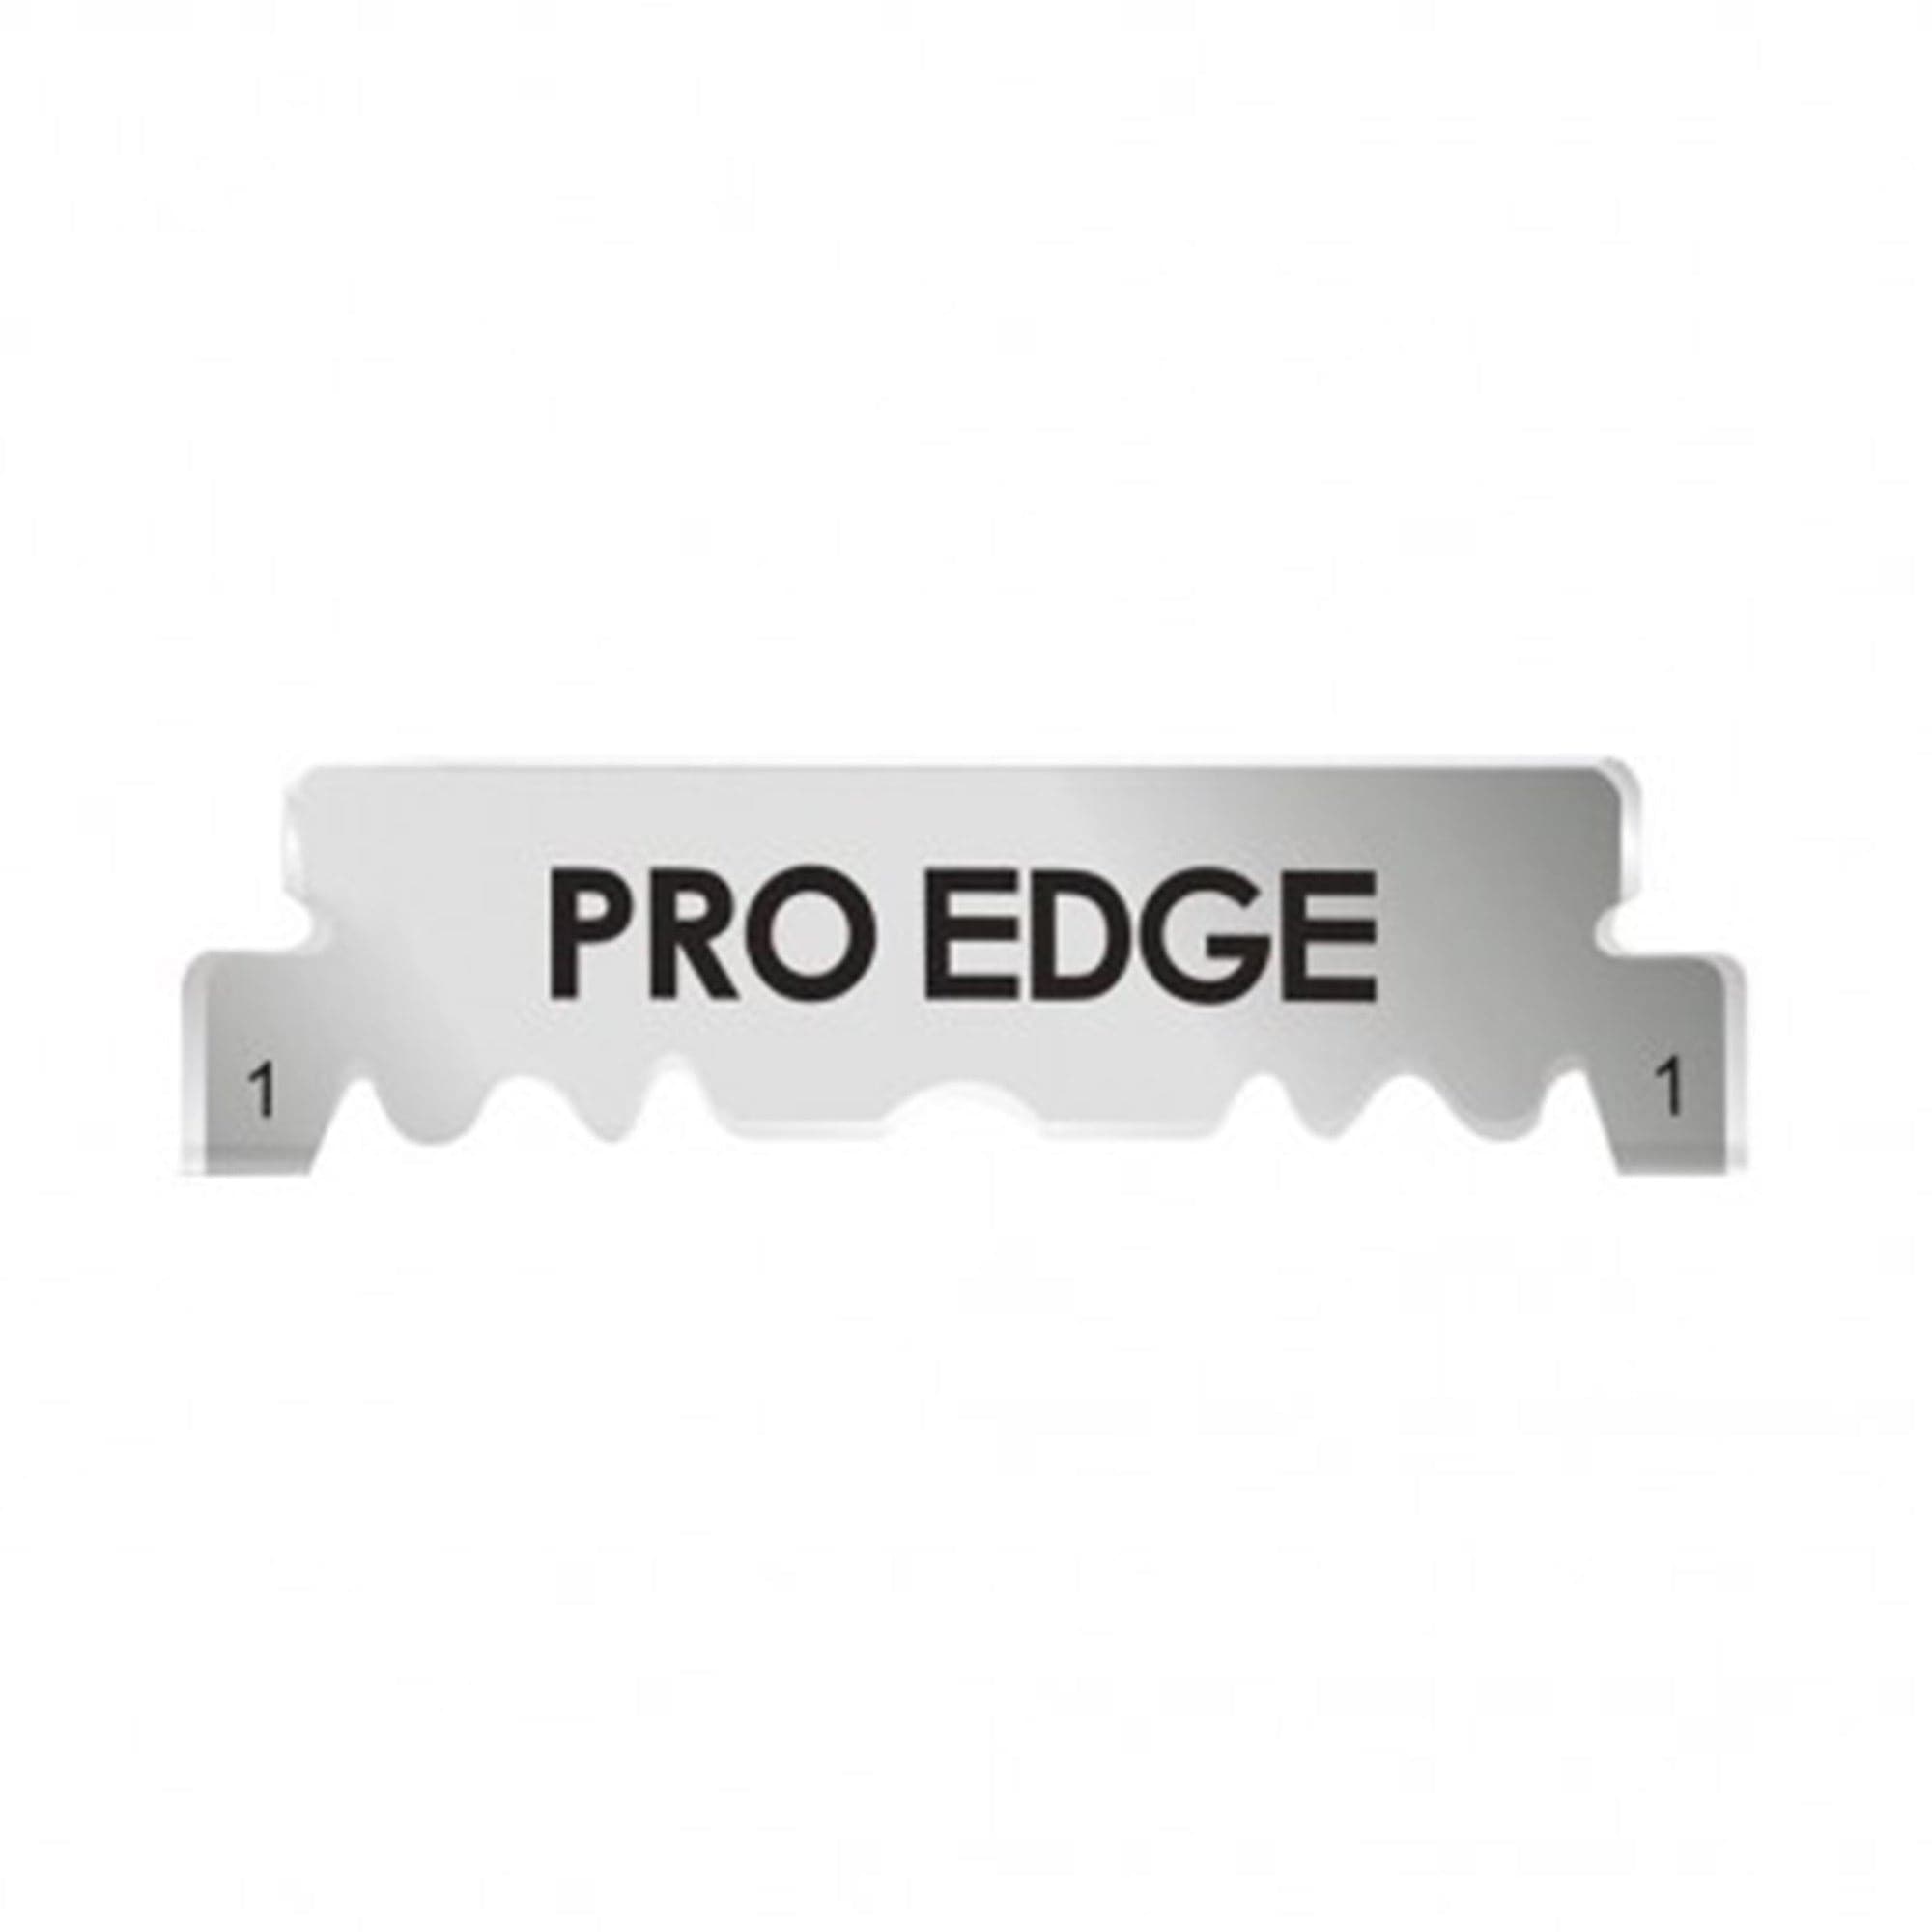 RK Pro Edge - Single Edge Razor Blade (100pcs)